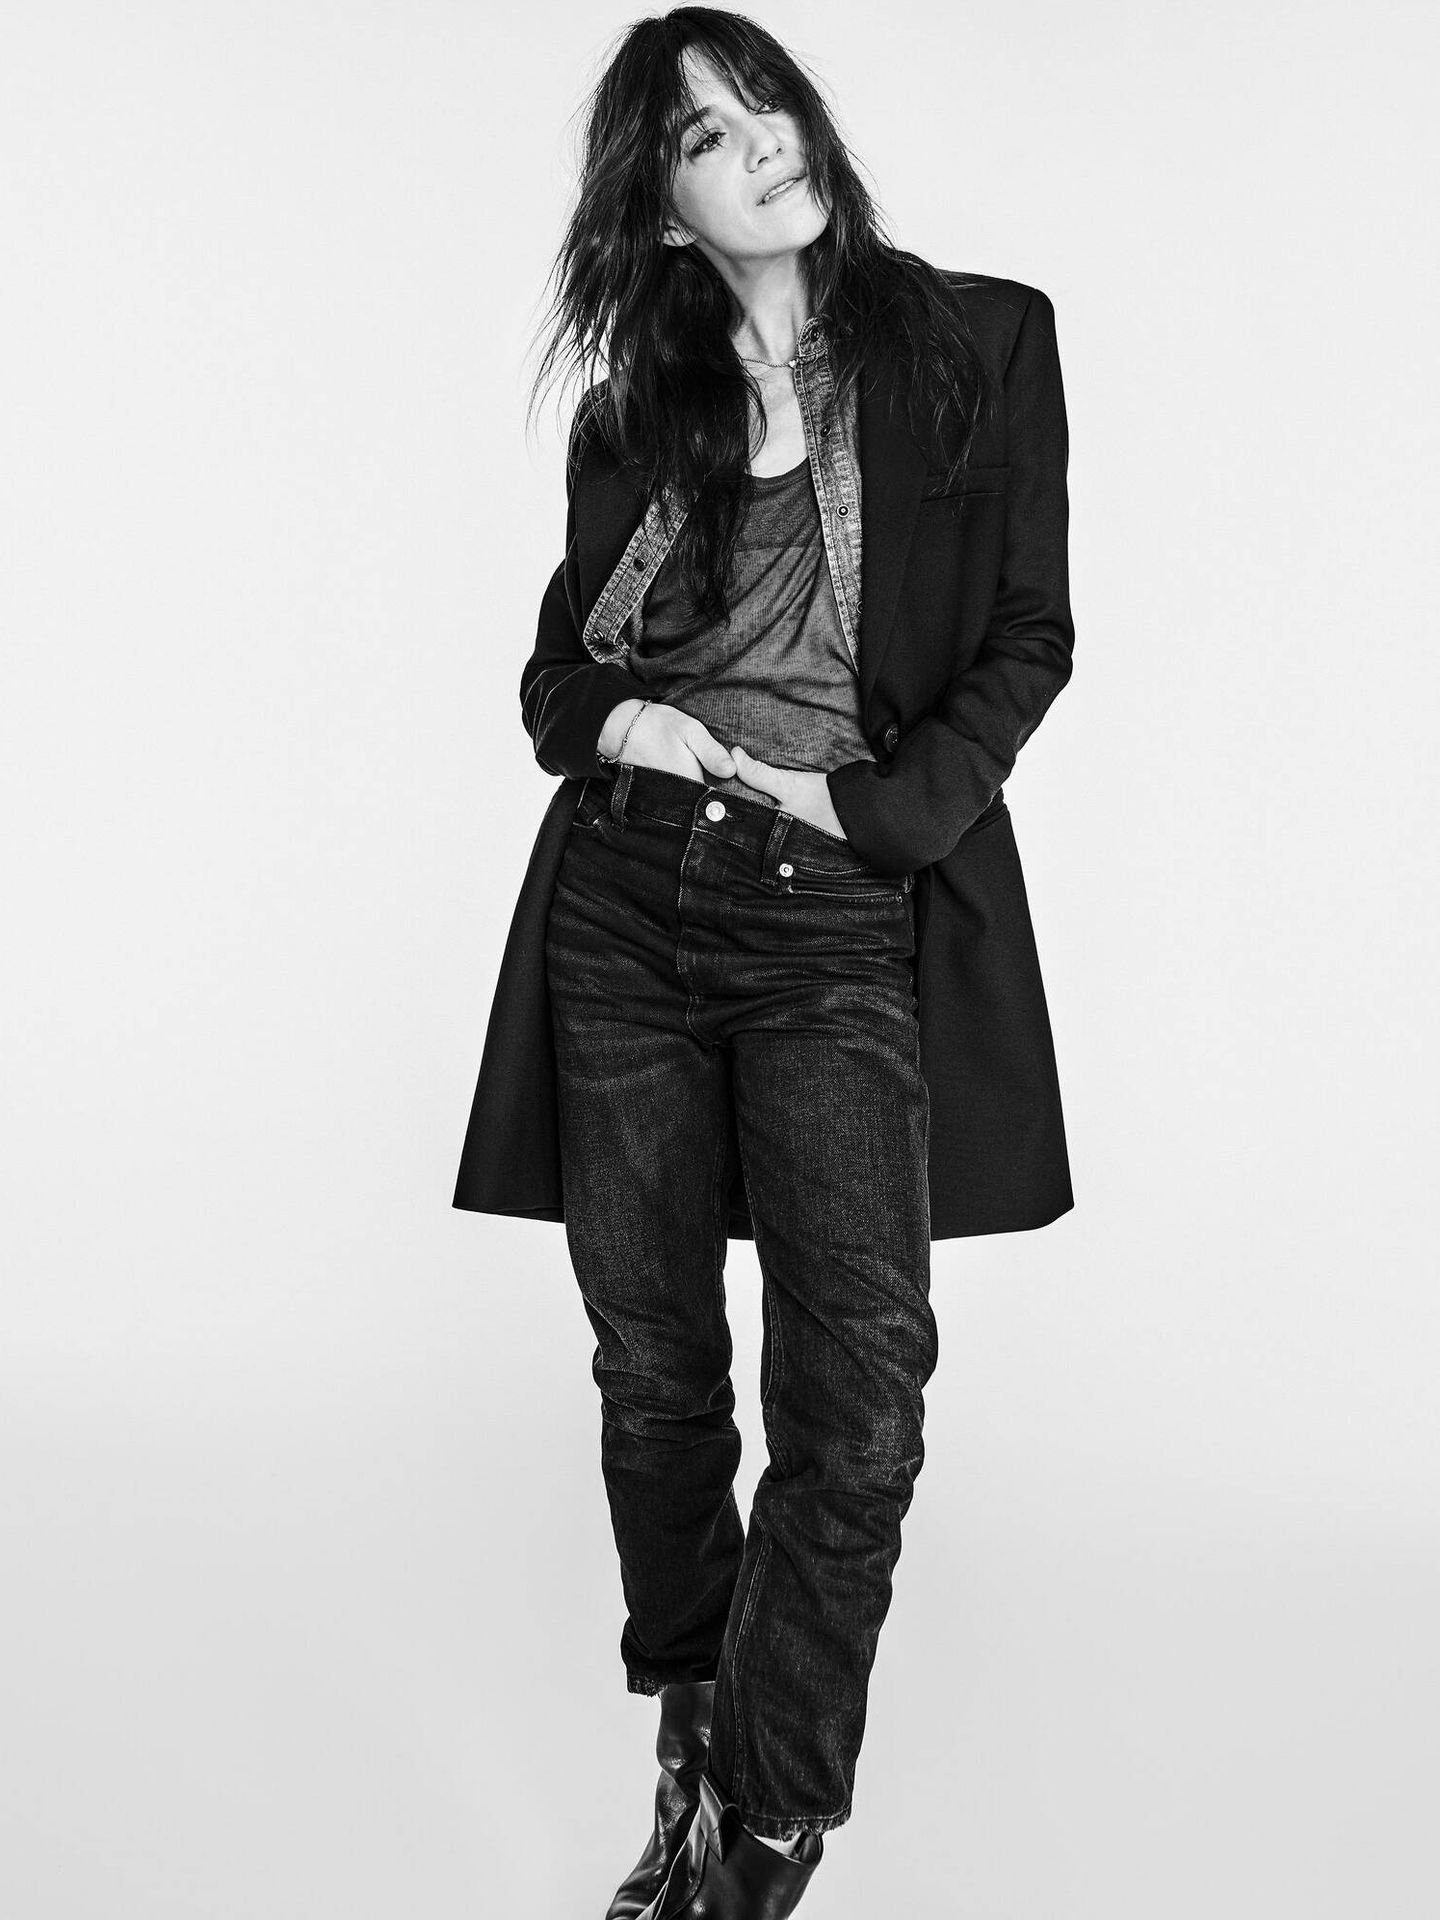 Charlotte Gainsbourg x Zara.